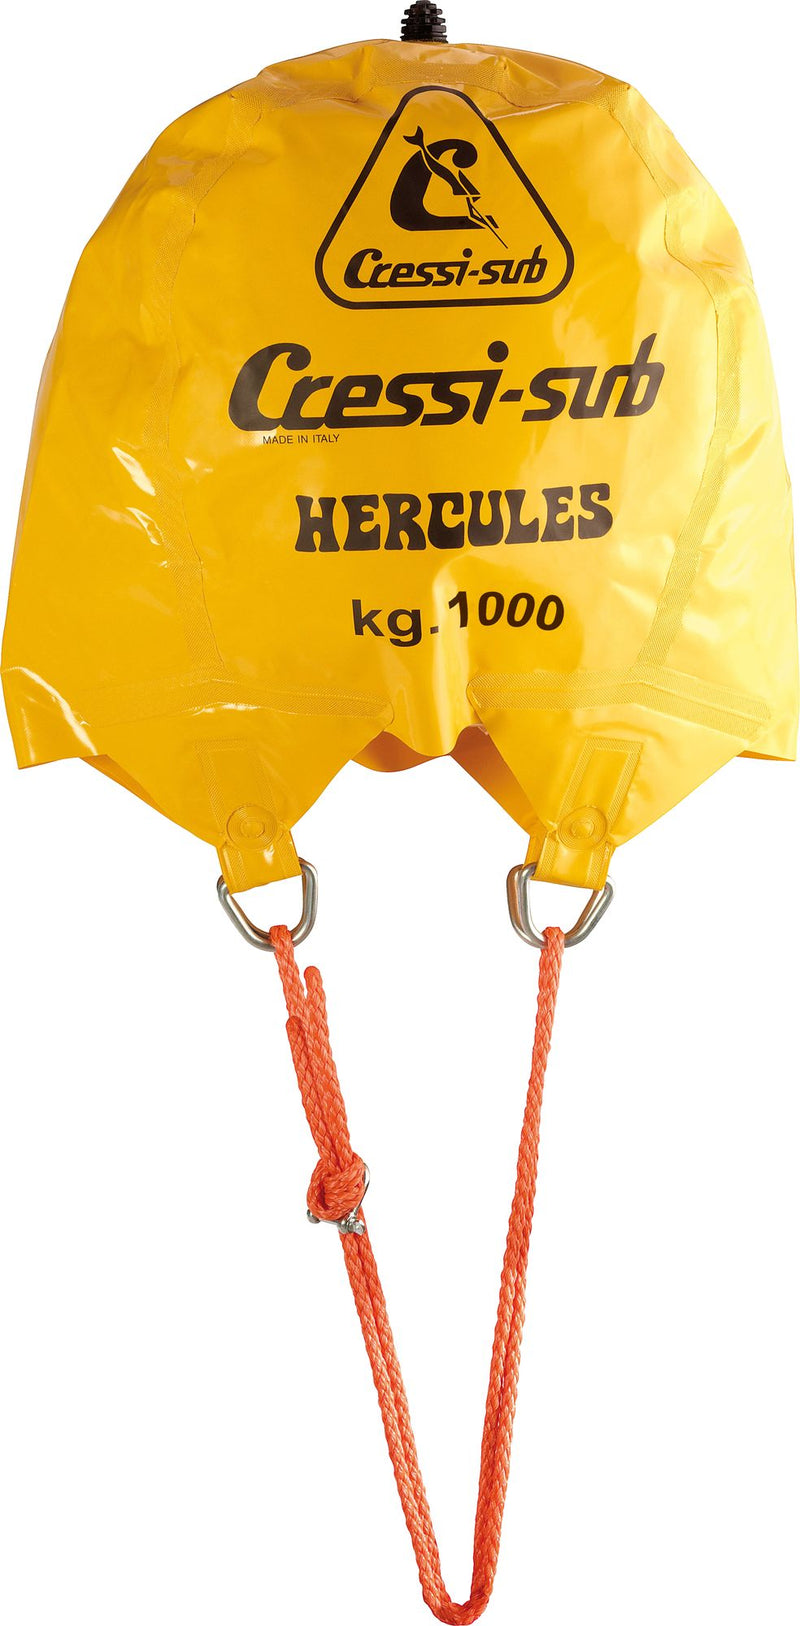 Hercules Lifting Balloon - Cressi